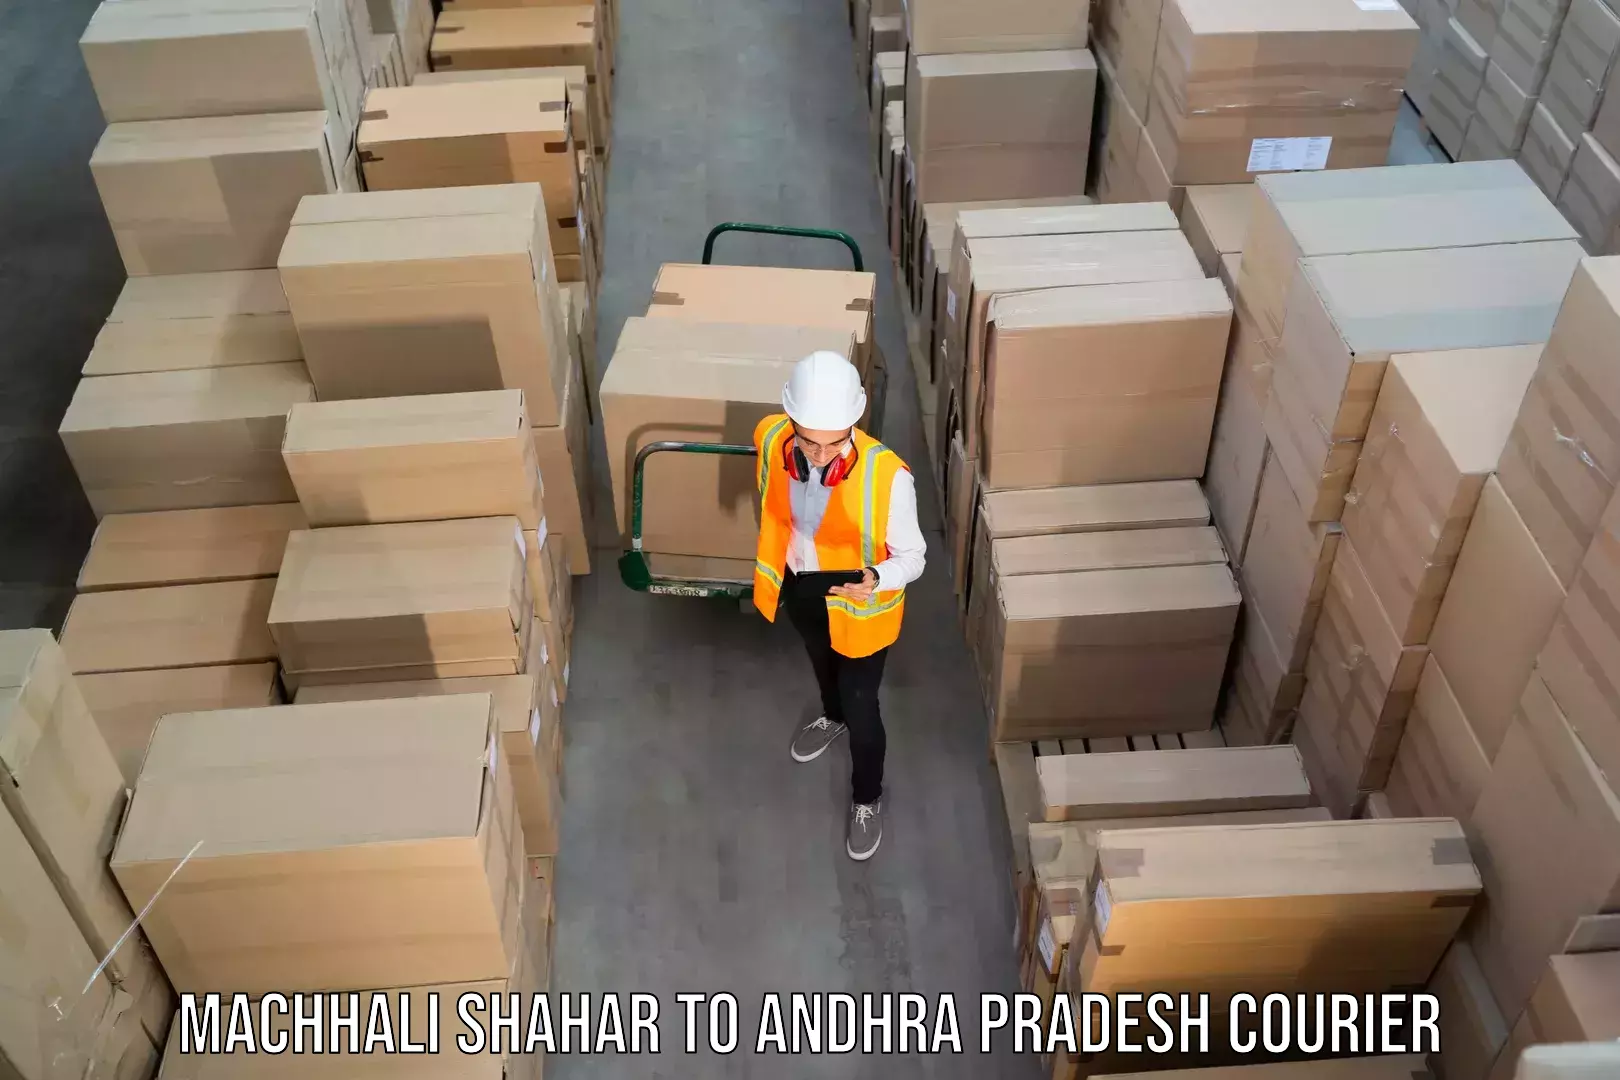 Digital courier platforms Machhali Shahar to Pakala